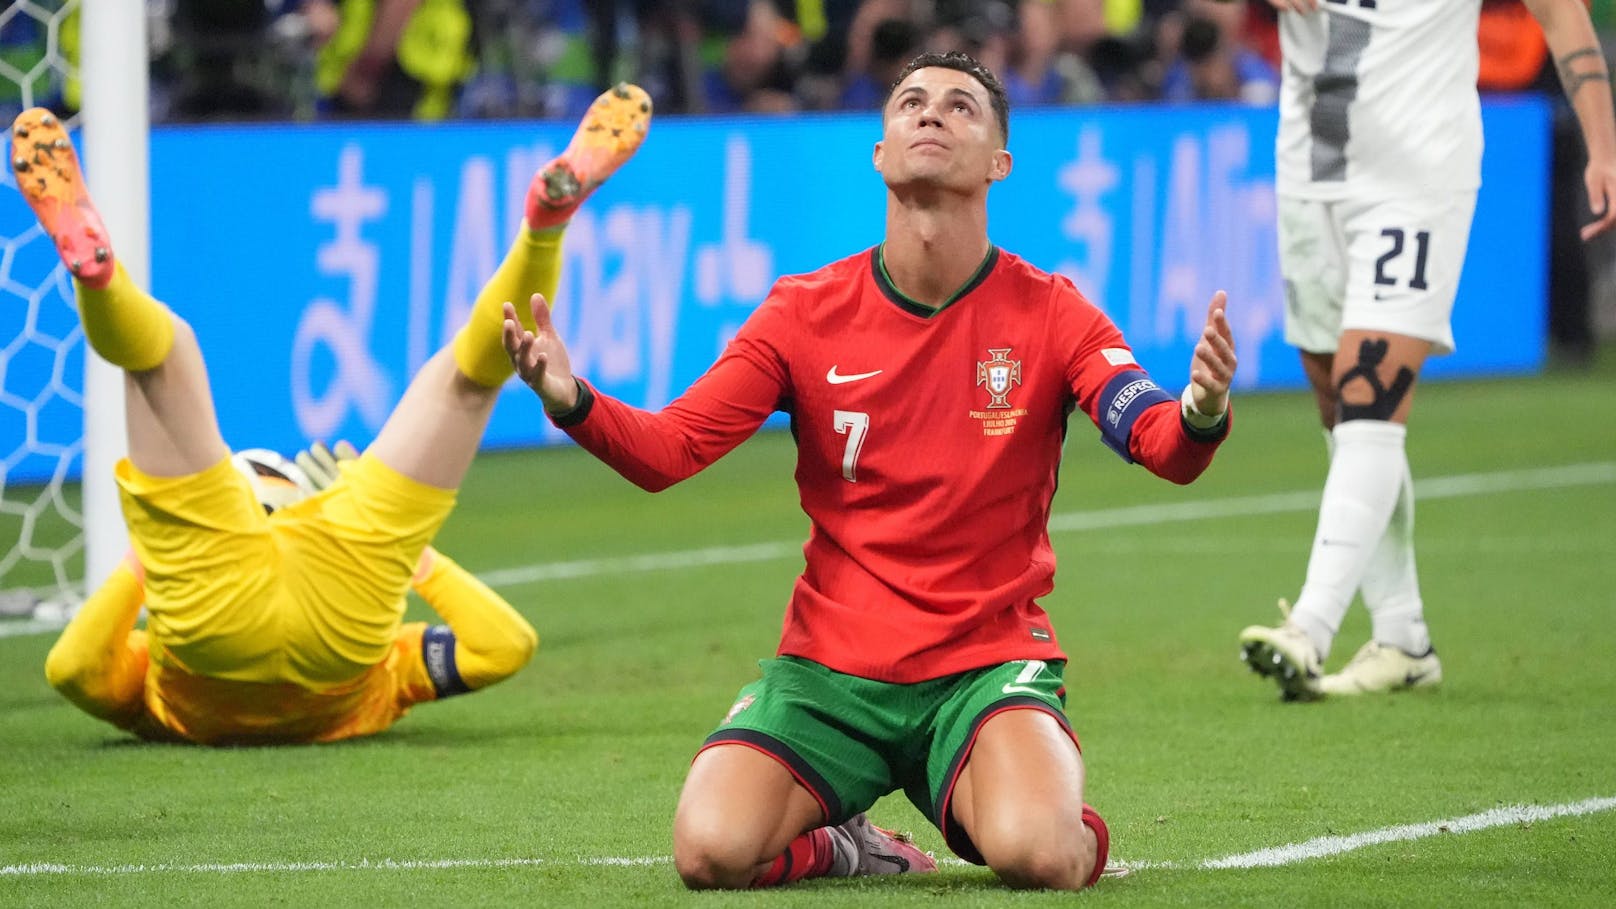 "Misstiano Penaldo!" BBC verspottet Ronaldo nach Elfer